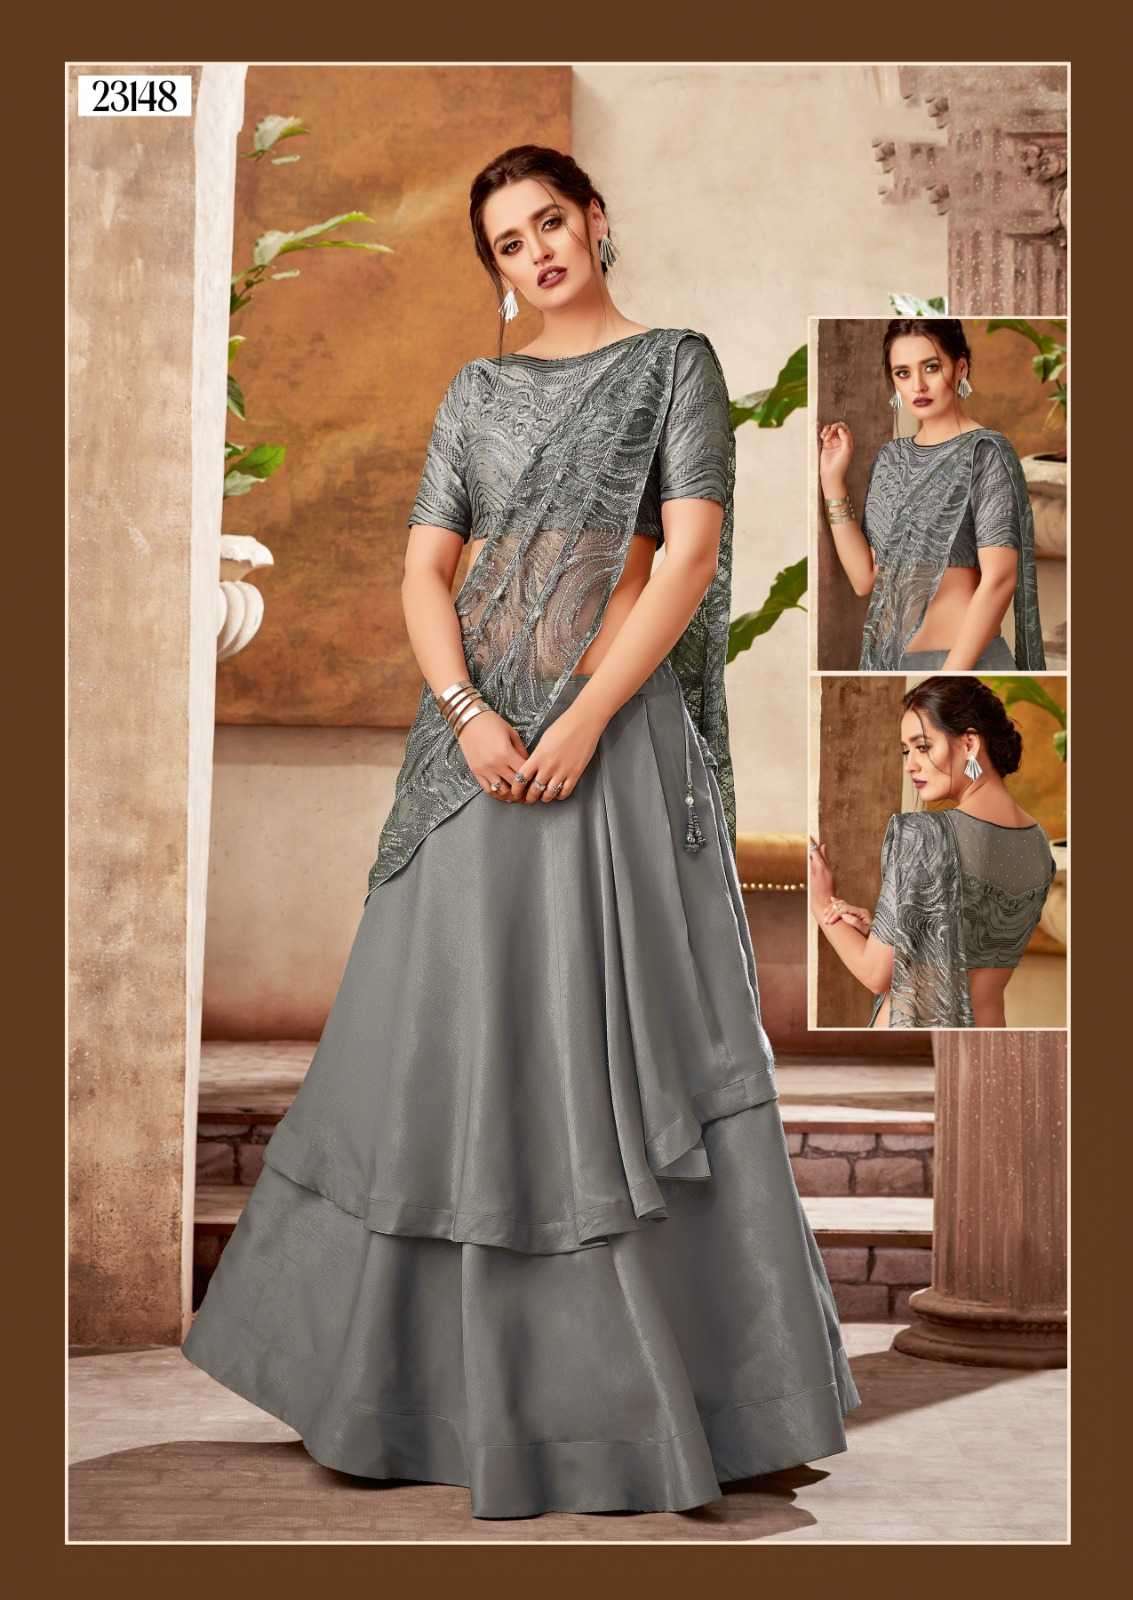 Mahotsav #MohMaya #Indian #Saree #Fashion #Designerwear #Fabric #Wedding |  Lehenga style, Lehenga style saree, Wedding chaniya choli